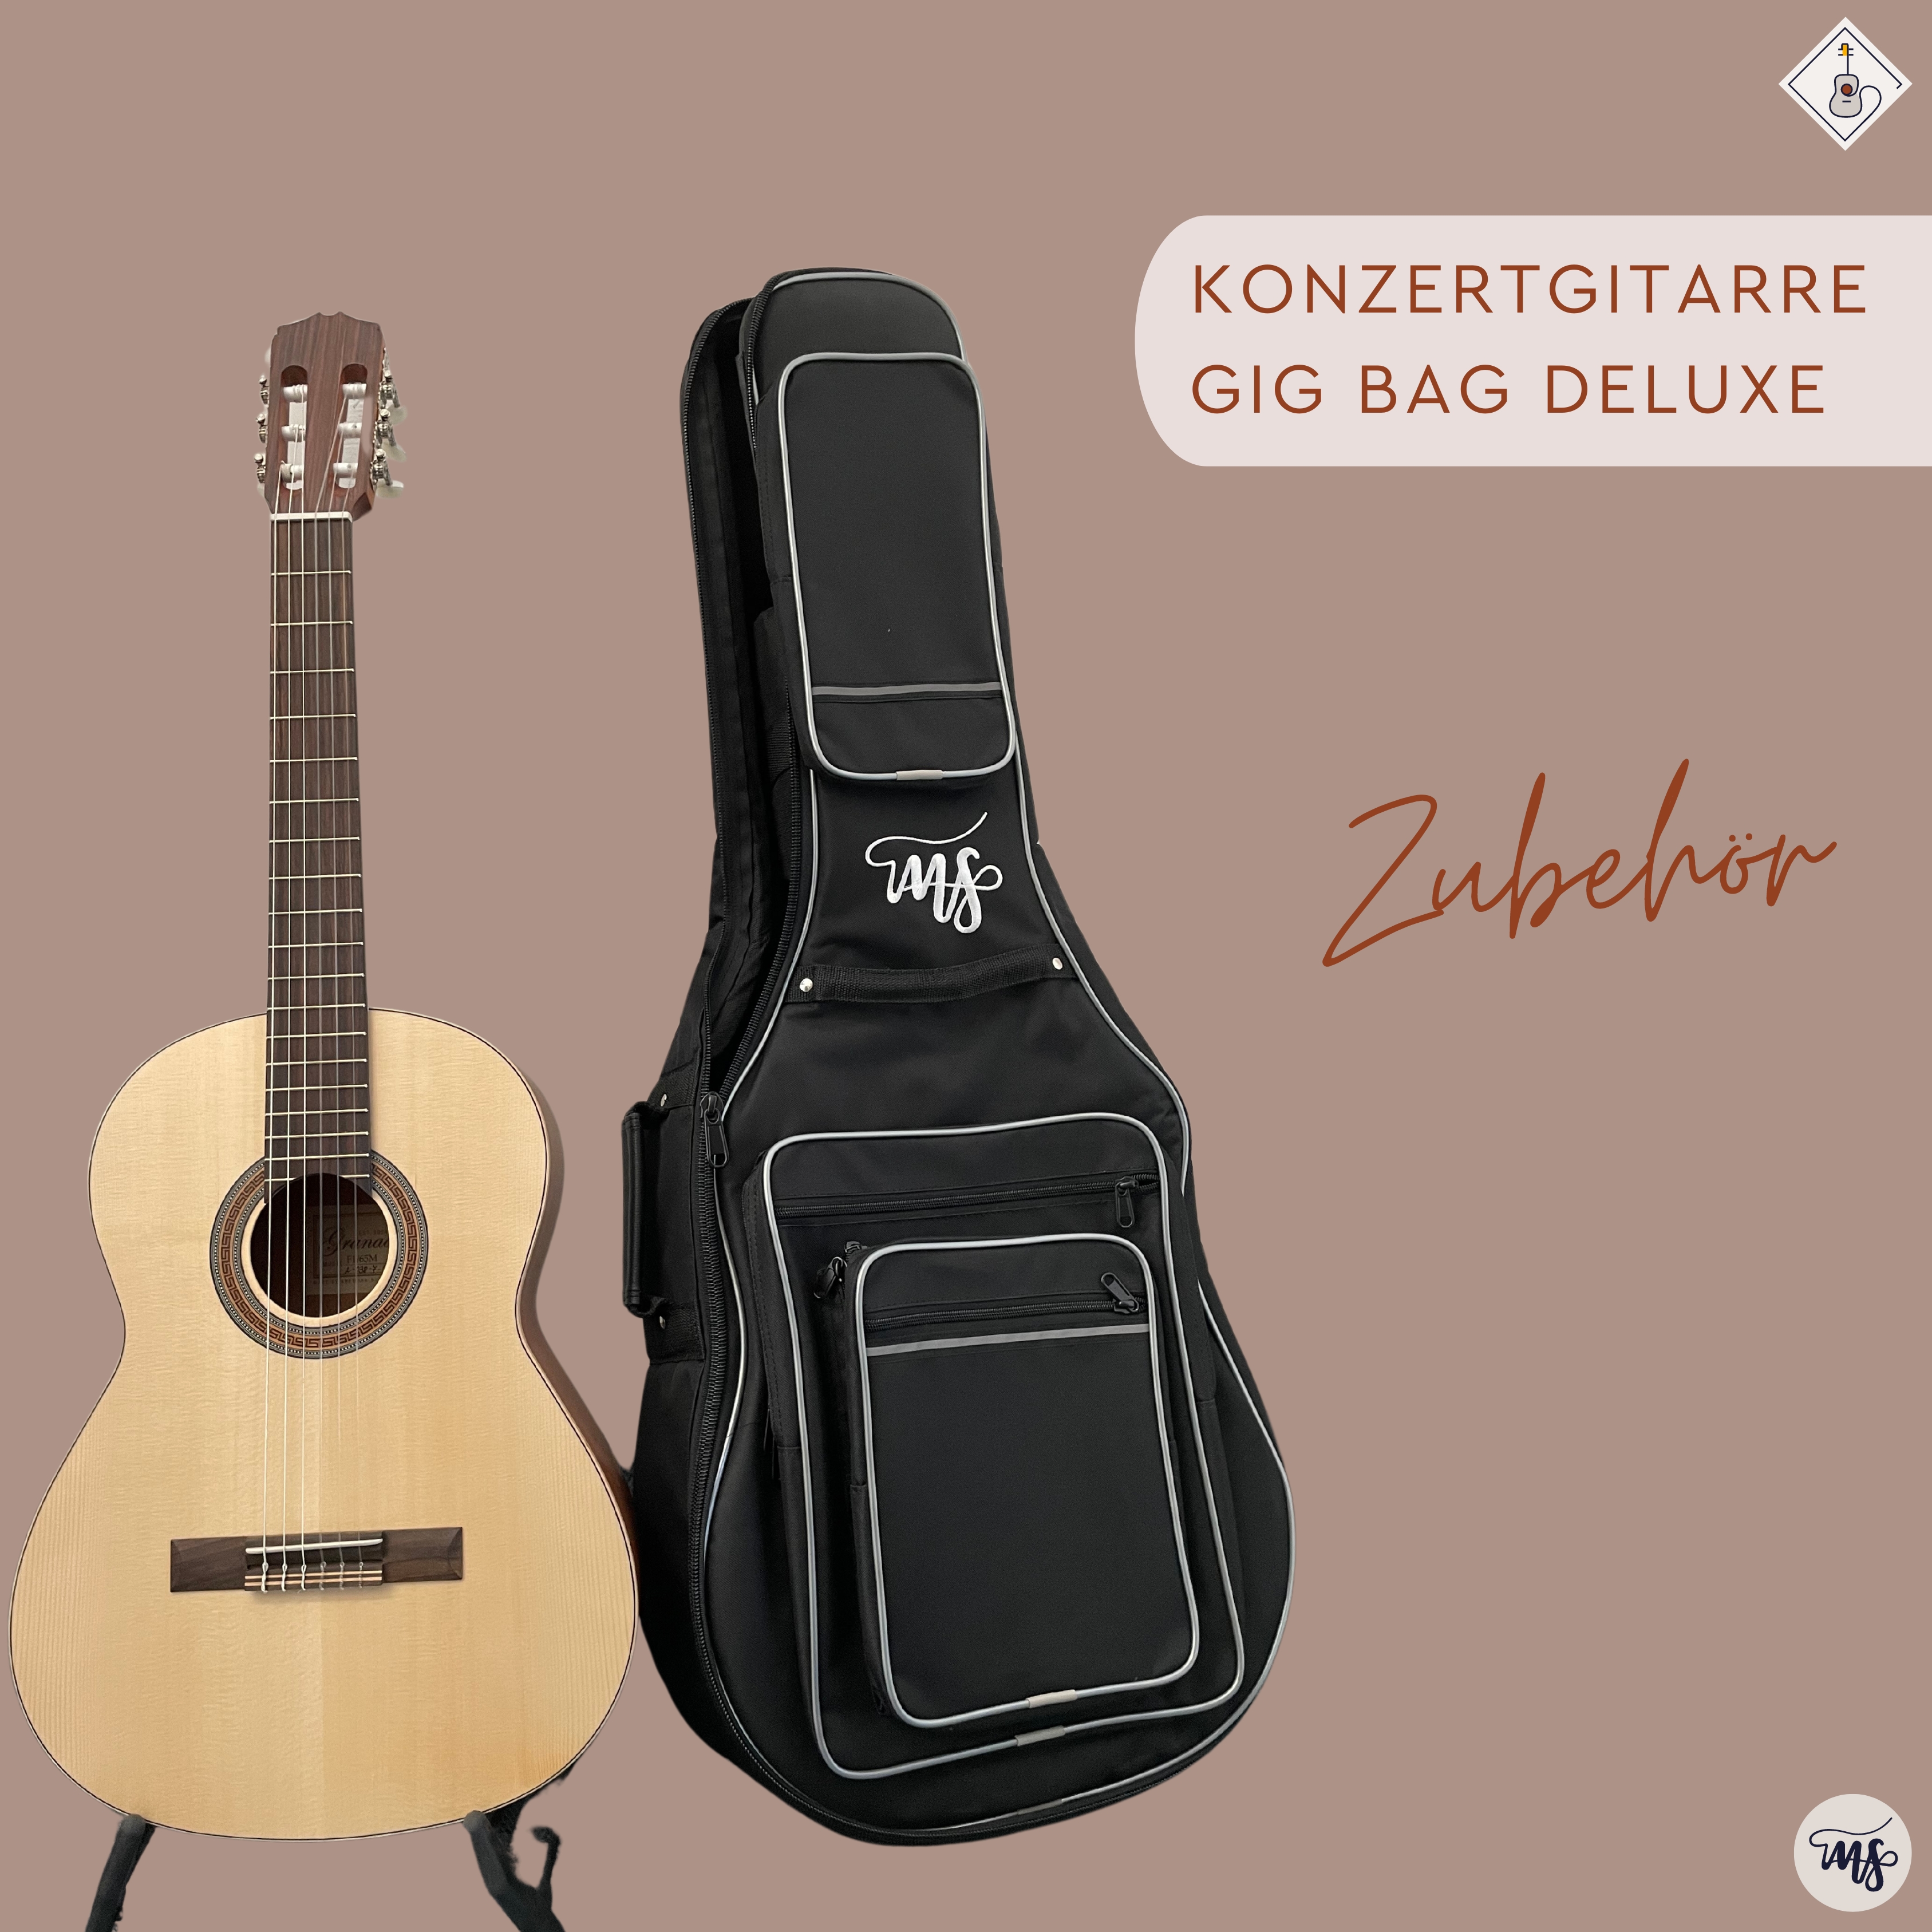 Konzertgitarre Gig Bag Deluxe 1